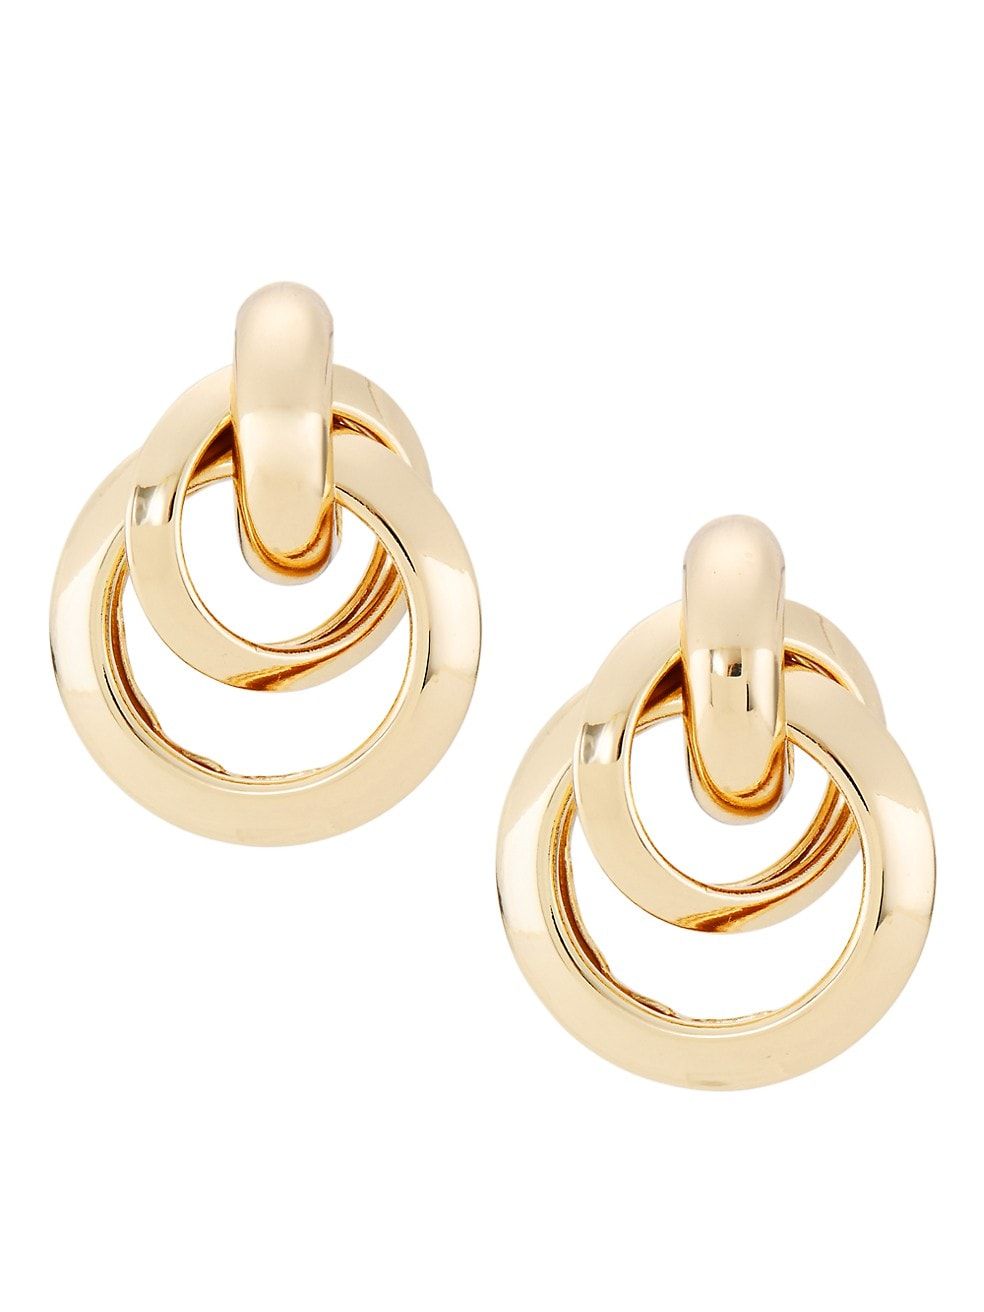 Love Knot 18K Gold-Plated Earrings | Saks Fifth Avenue